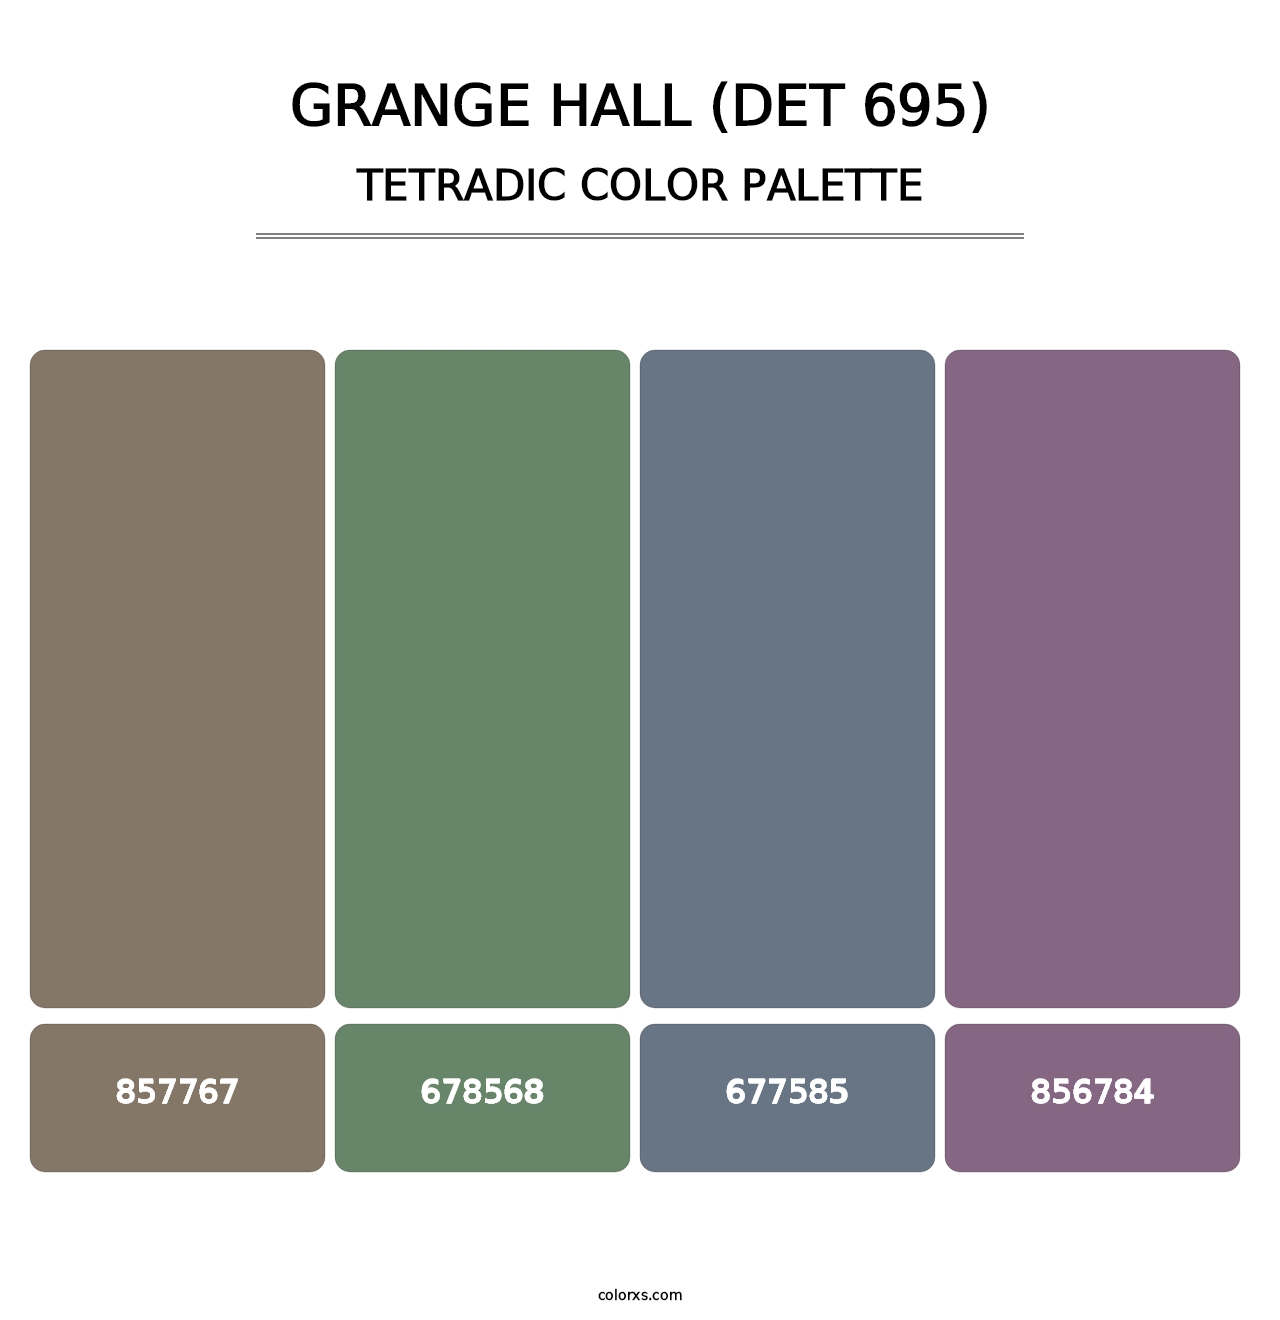 Grange Hall (DET 695) - Tetradic Color Palette